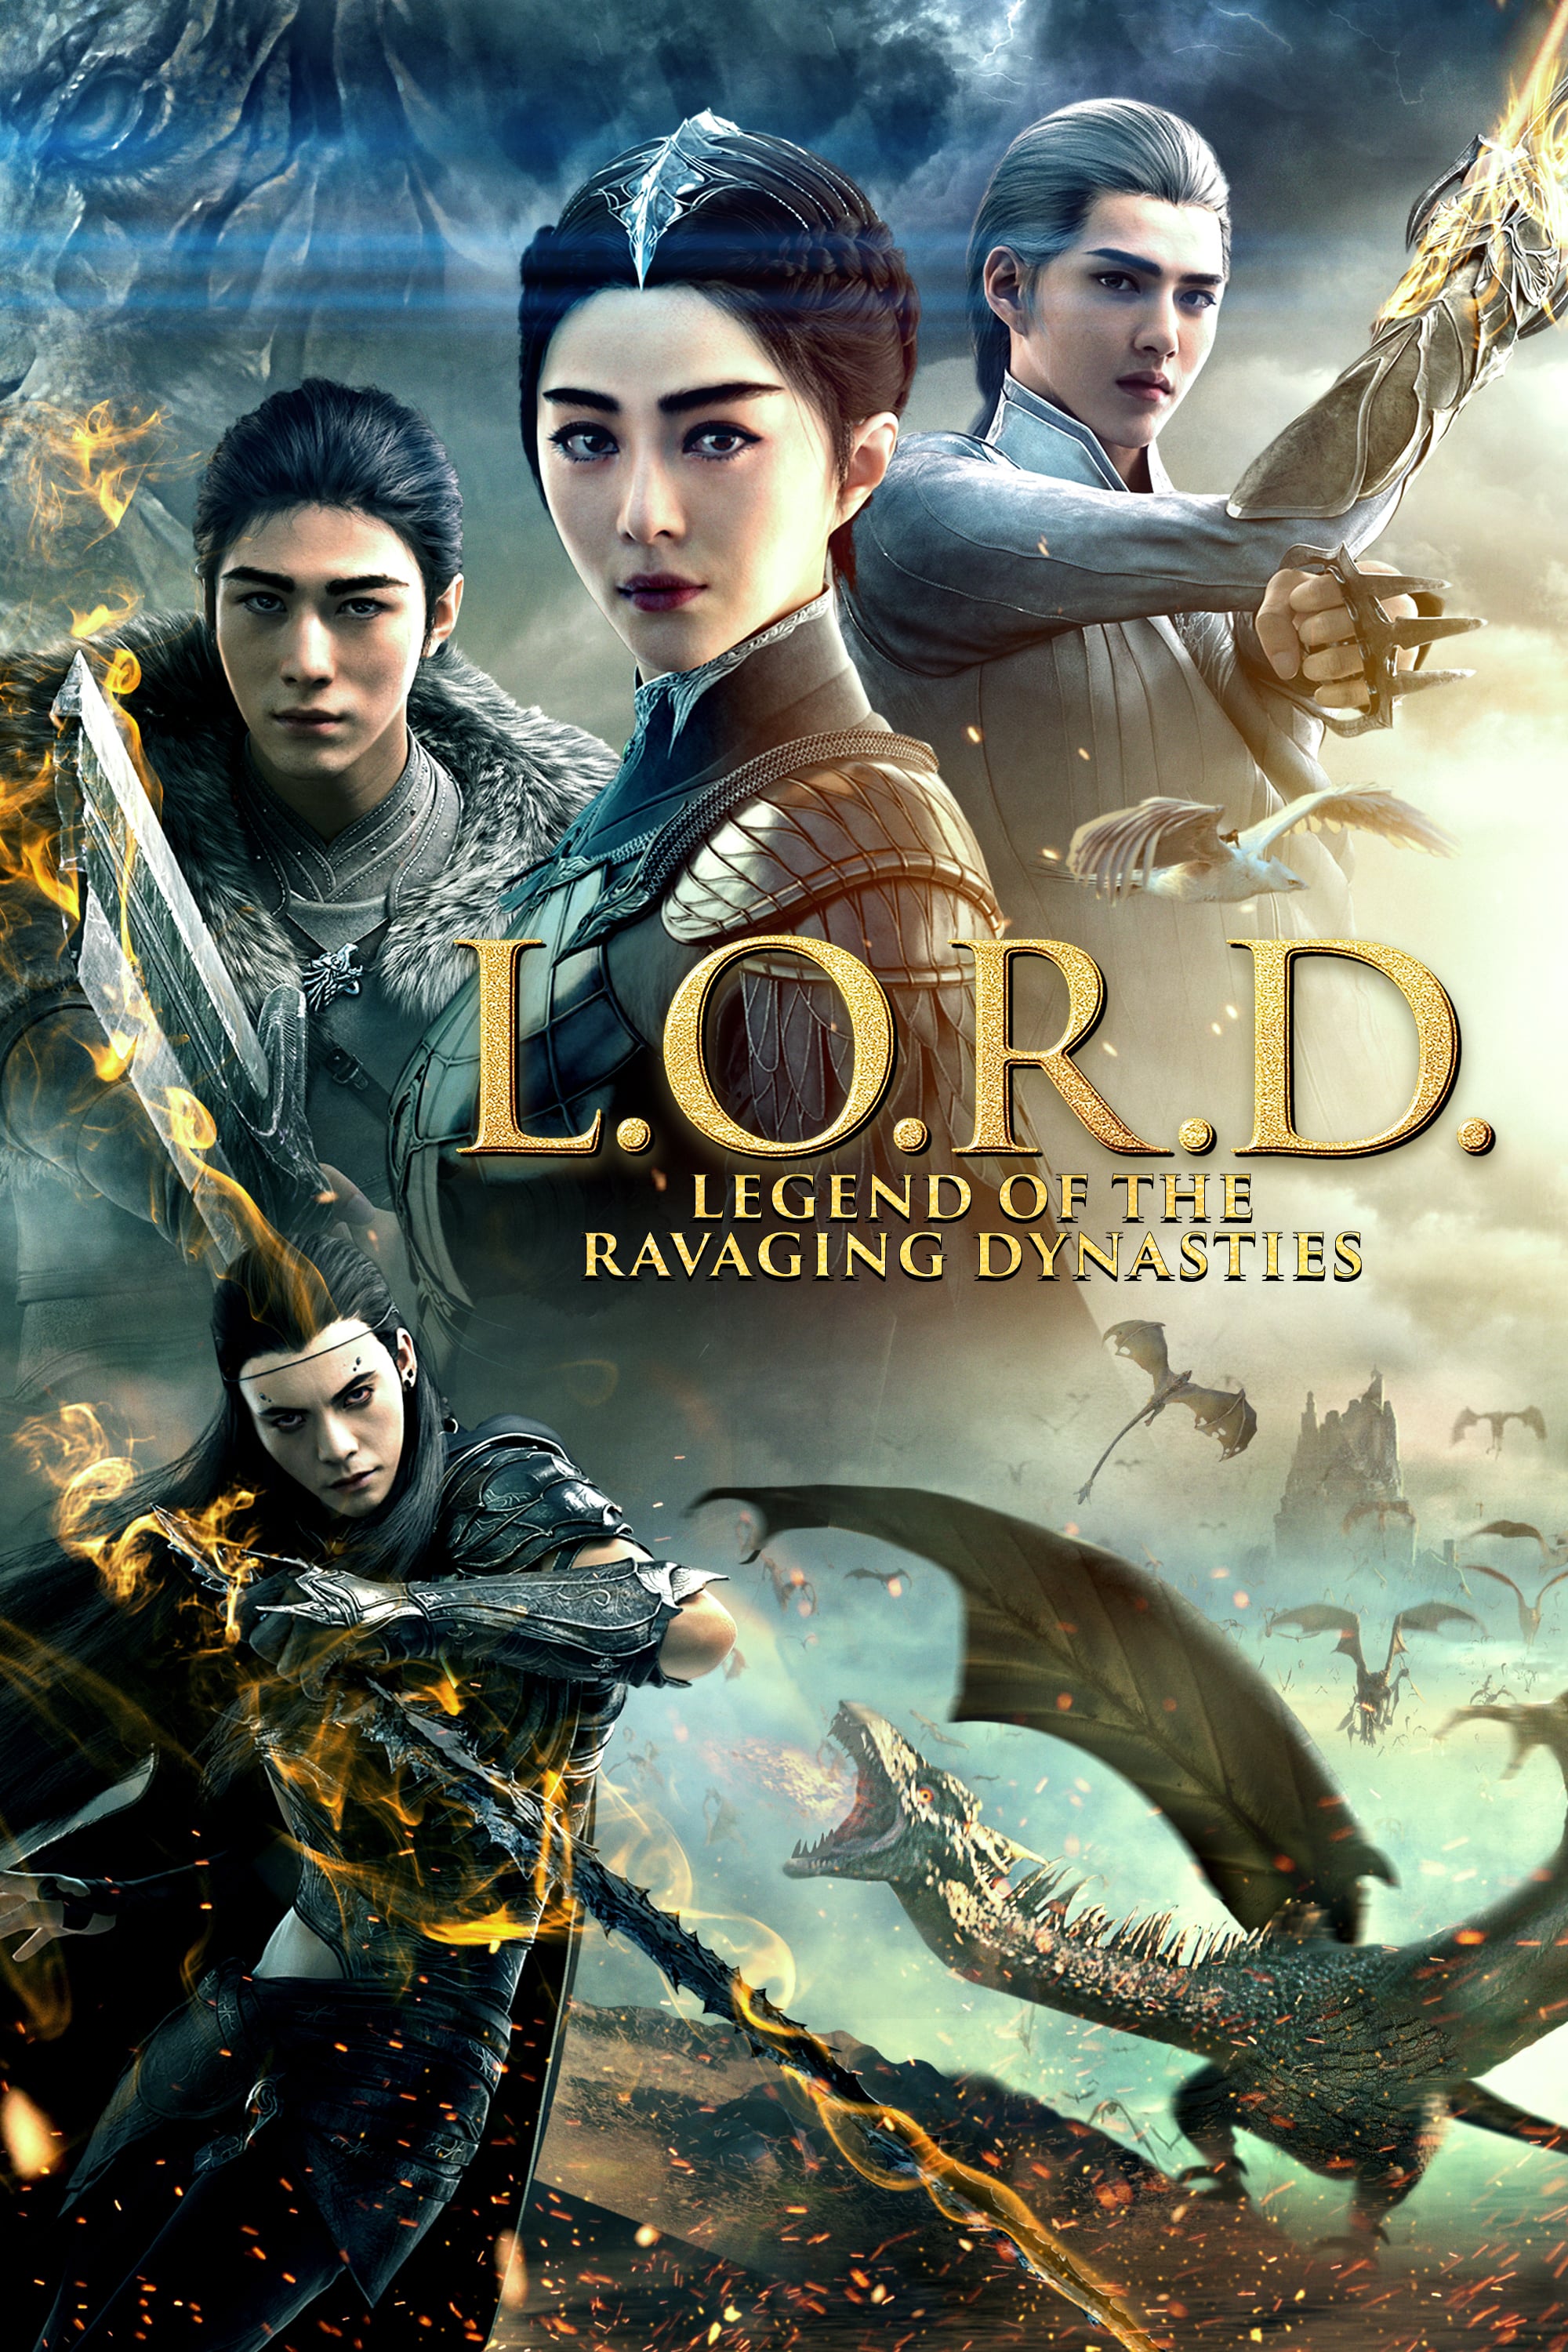 دانلود زیرنویس فارسی فیلم L.O.R.D: Legend of Ravaging Dynasties 2016